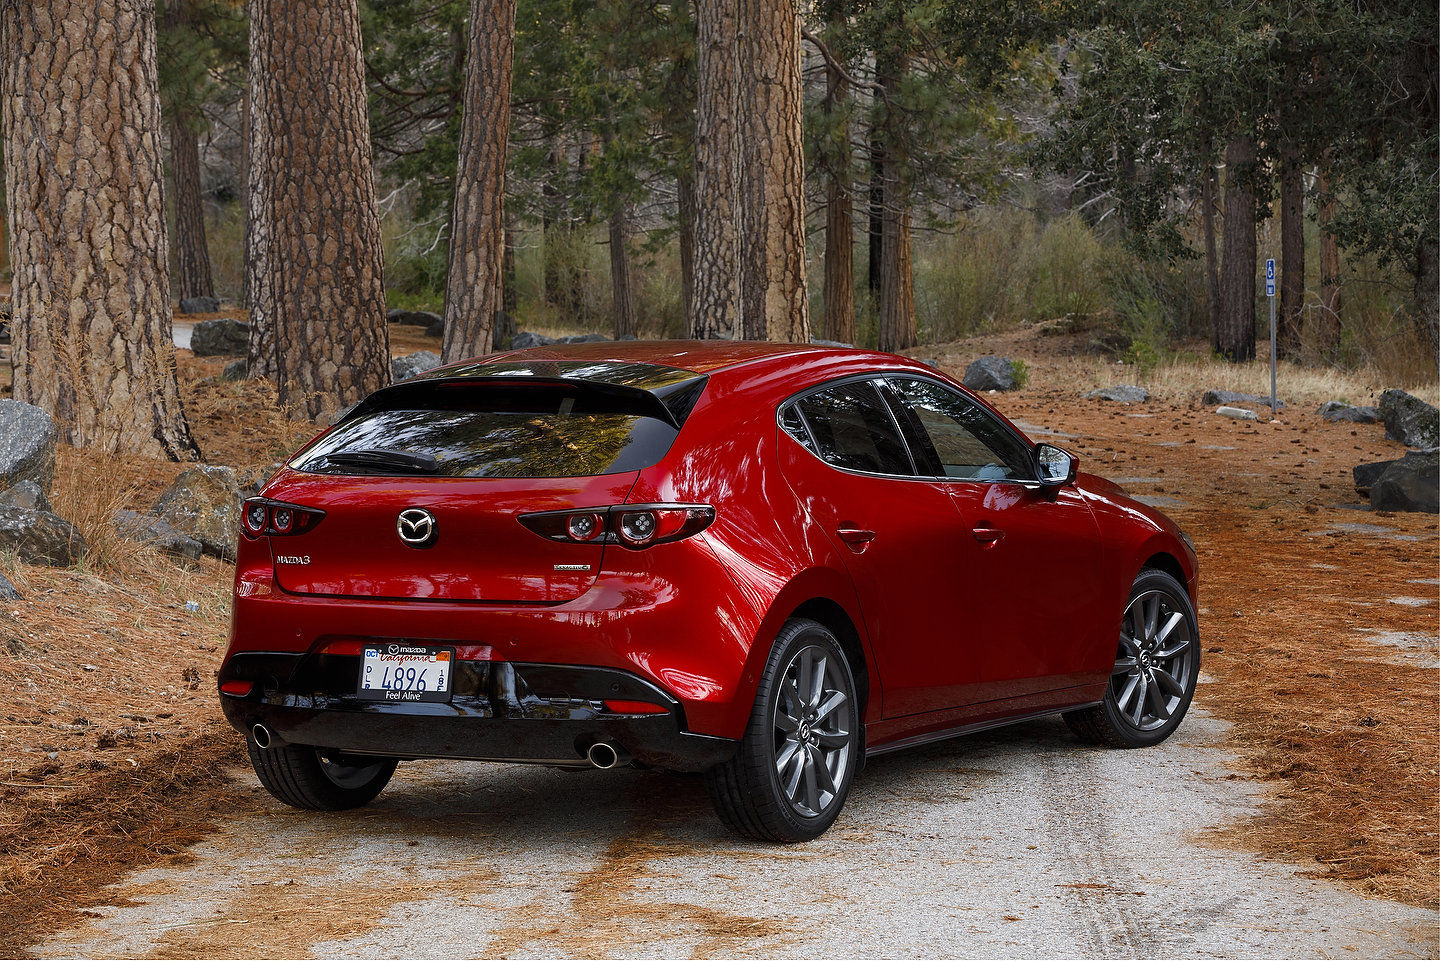 2019 Mazda3 Sport: More than just a Hatchback